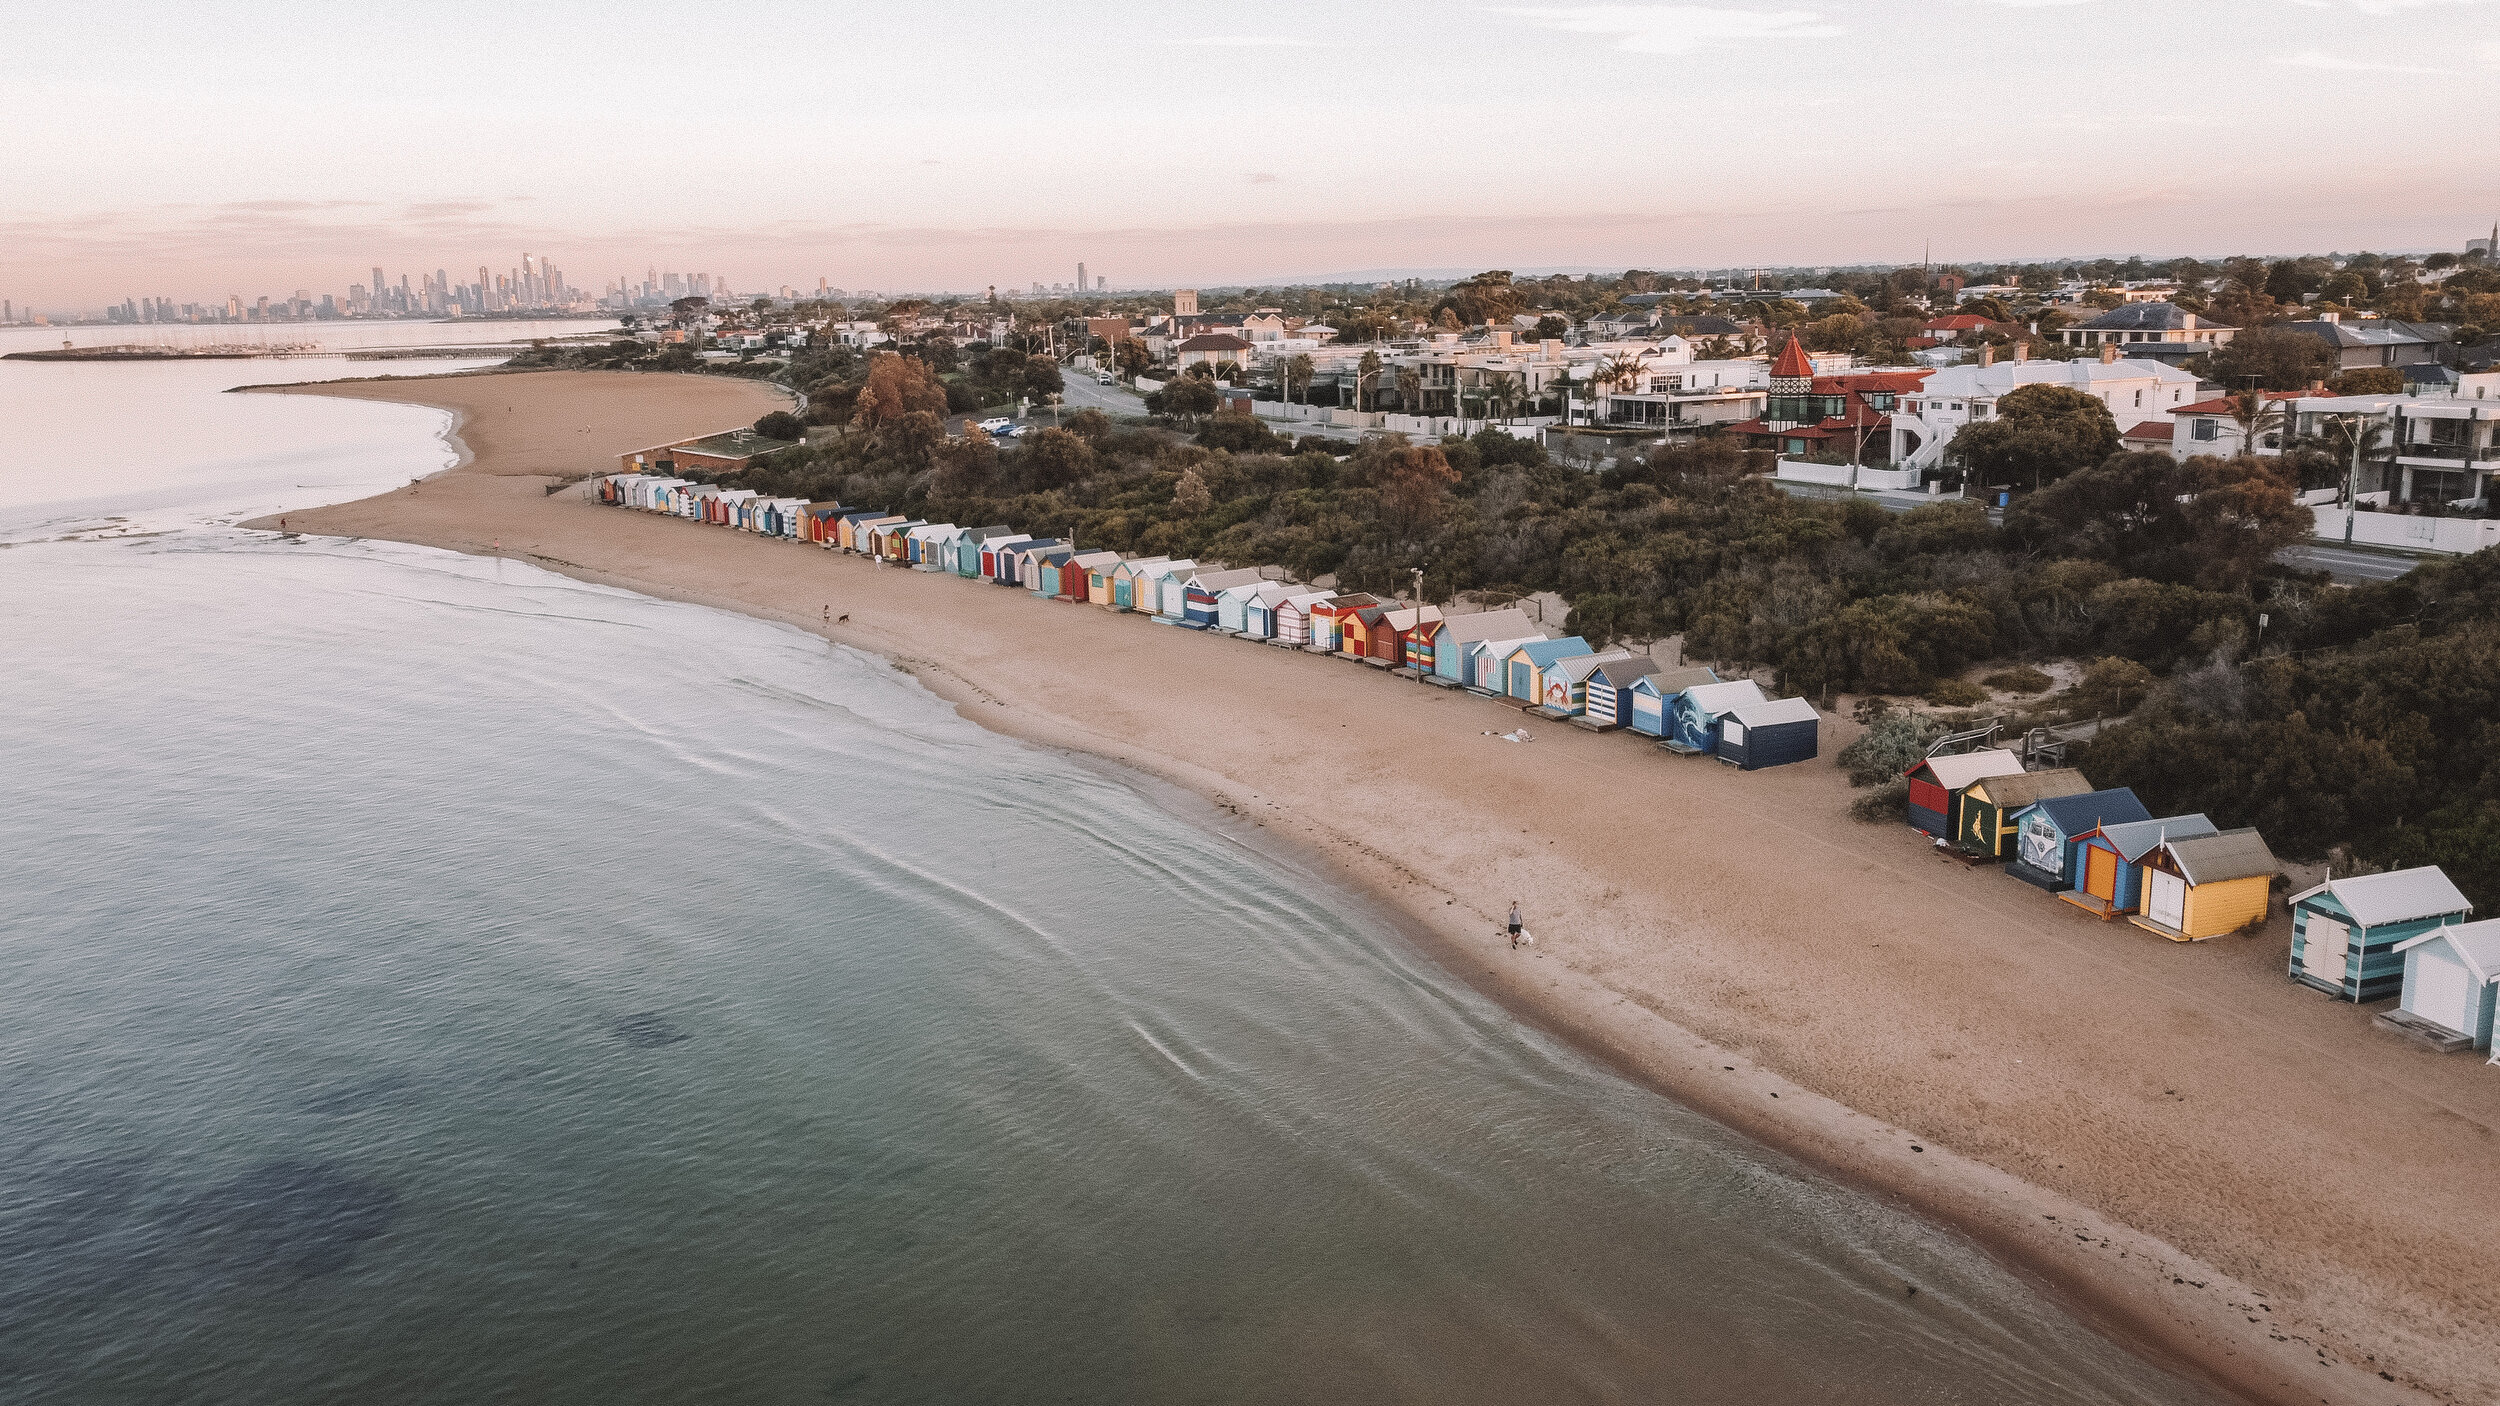 DJI Mavic Mini Drone Shot with the city skyline in the background - Brighton Bathing Boxes - Brighton - Melbourne - Victoria - Australia